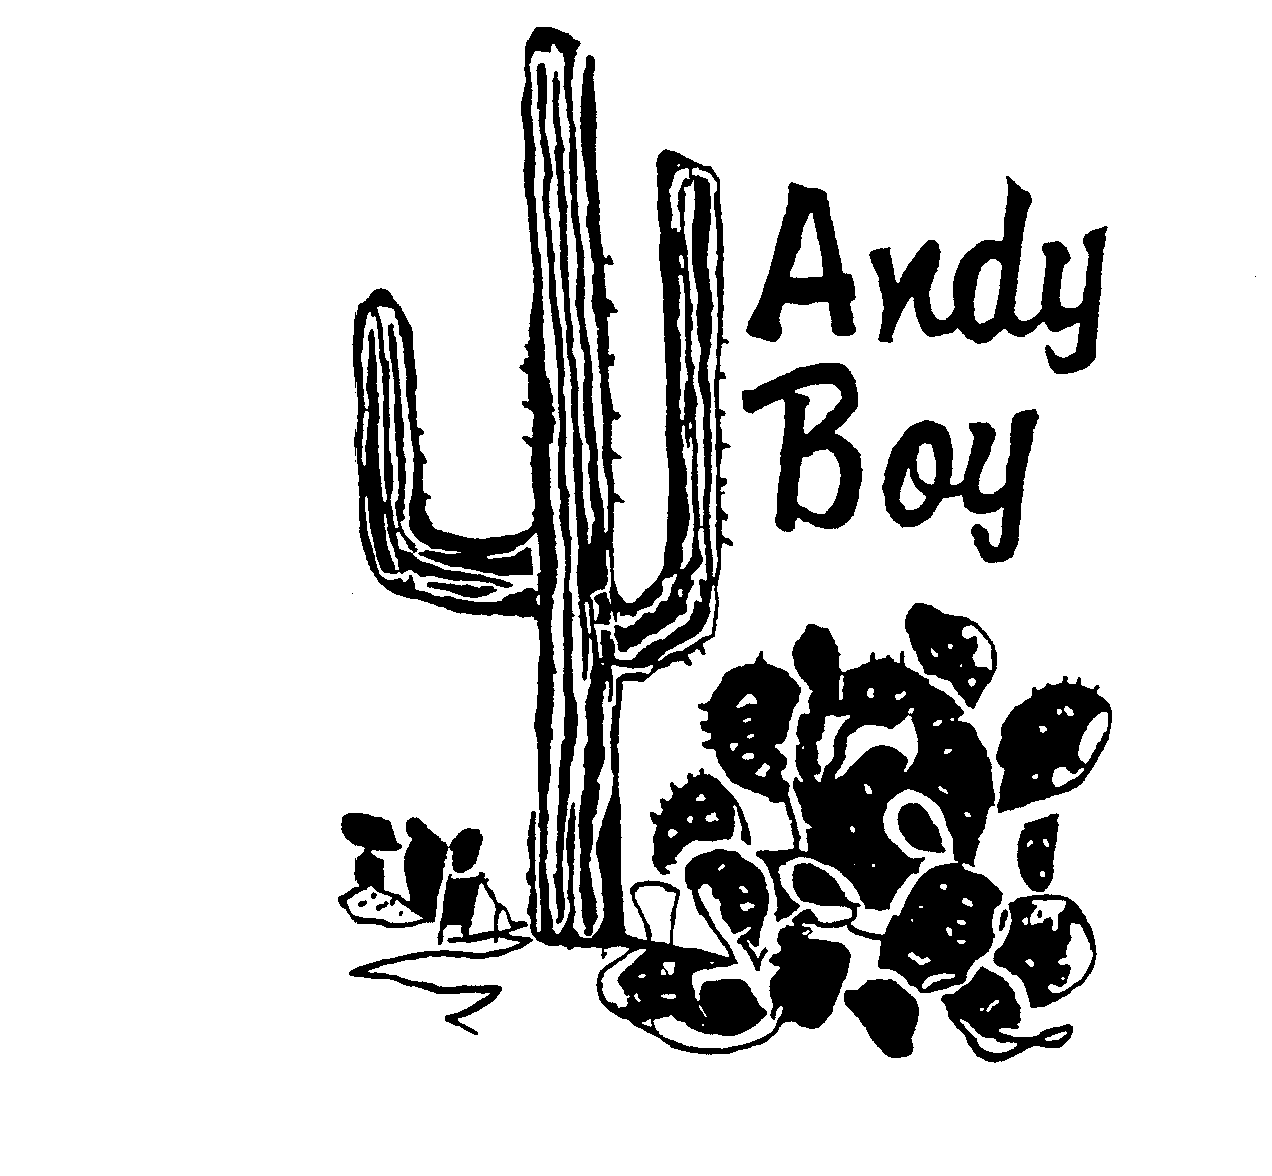  ANDY BOY